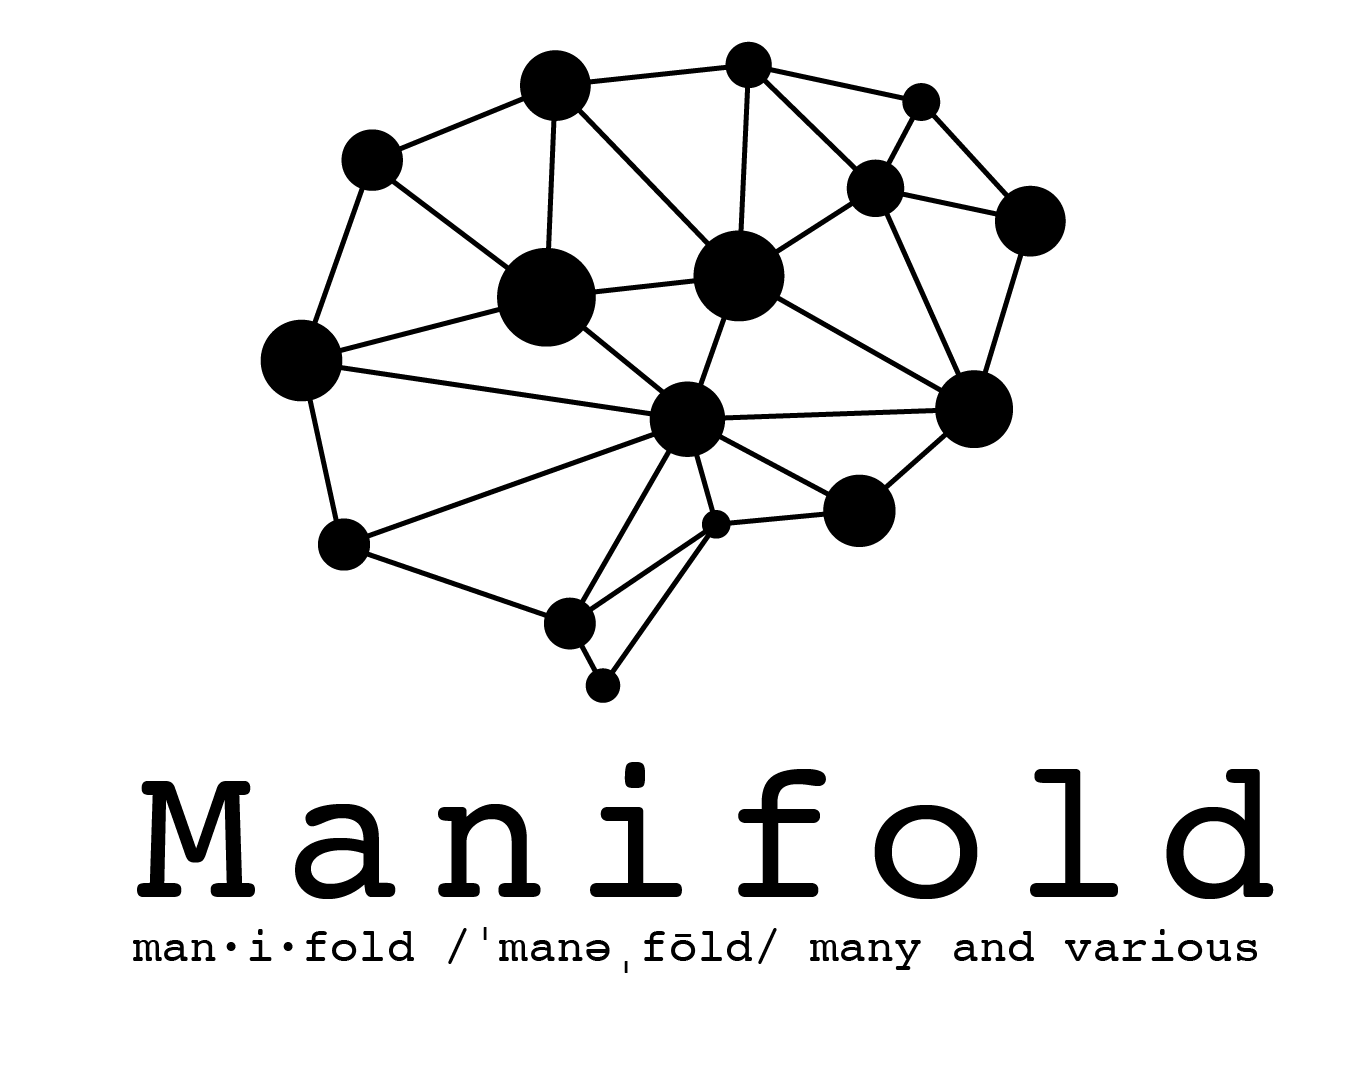 Manifold Learning